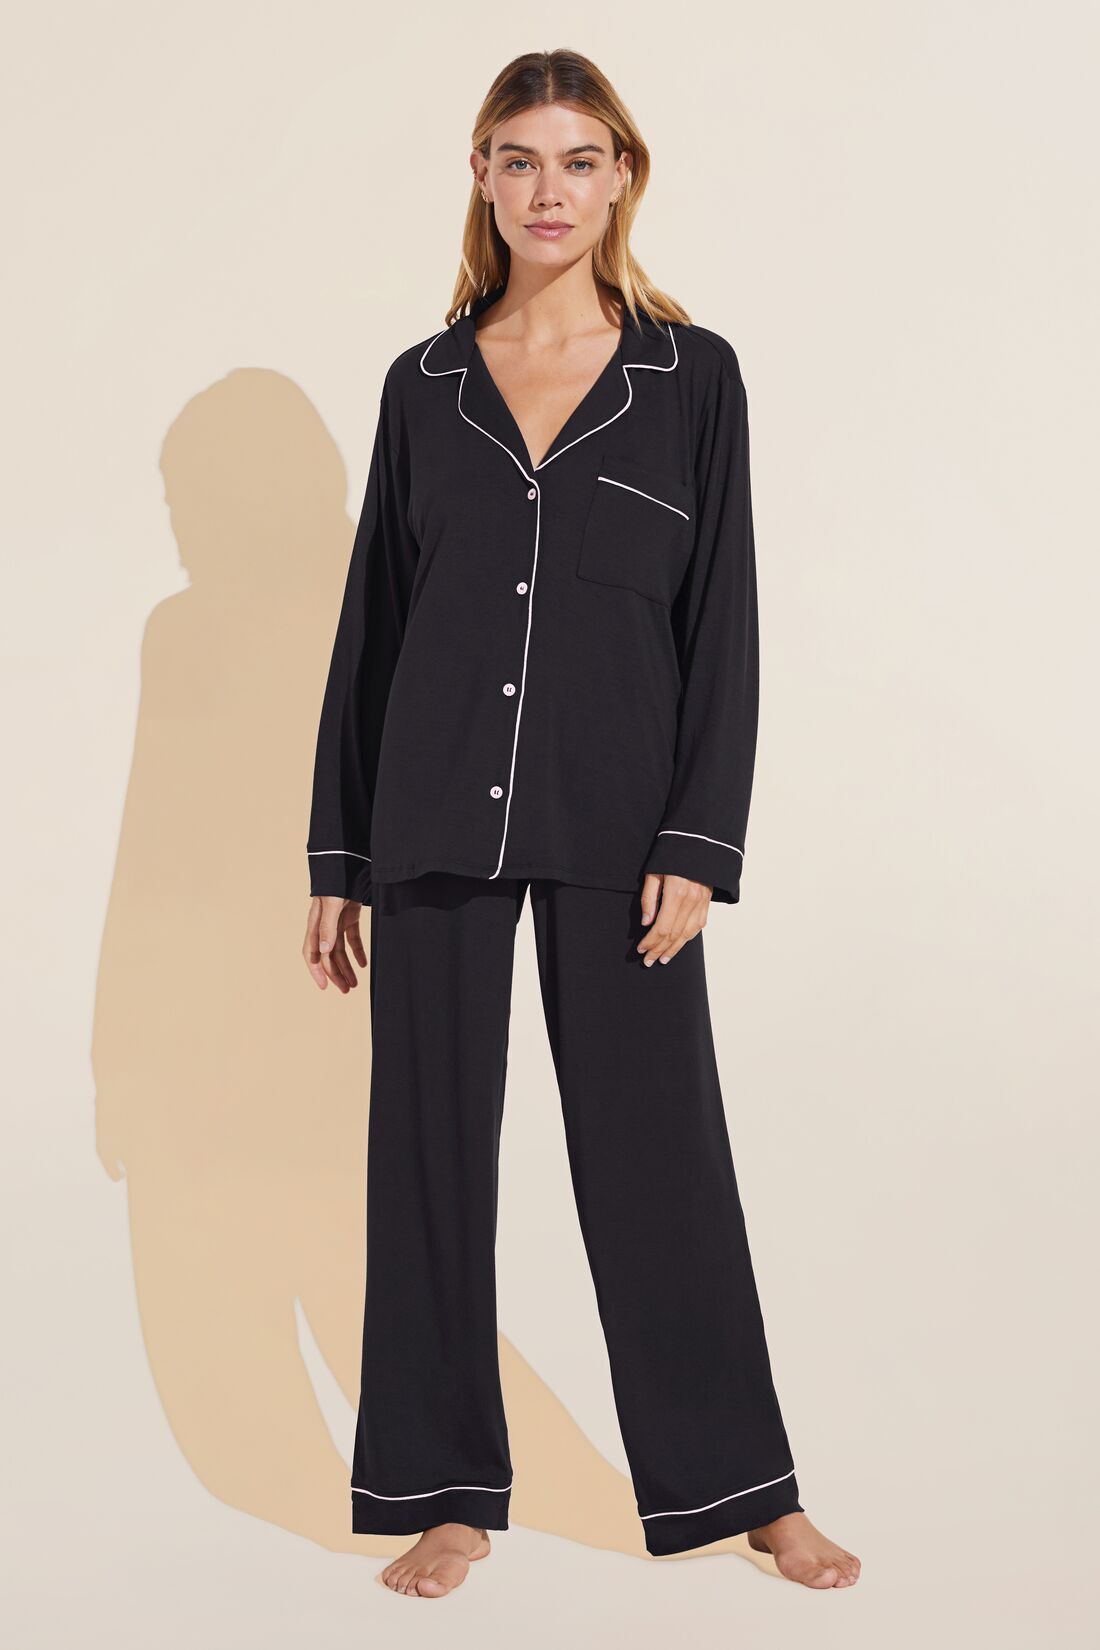 Gisele stretch-TENCEL modal pajama set